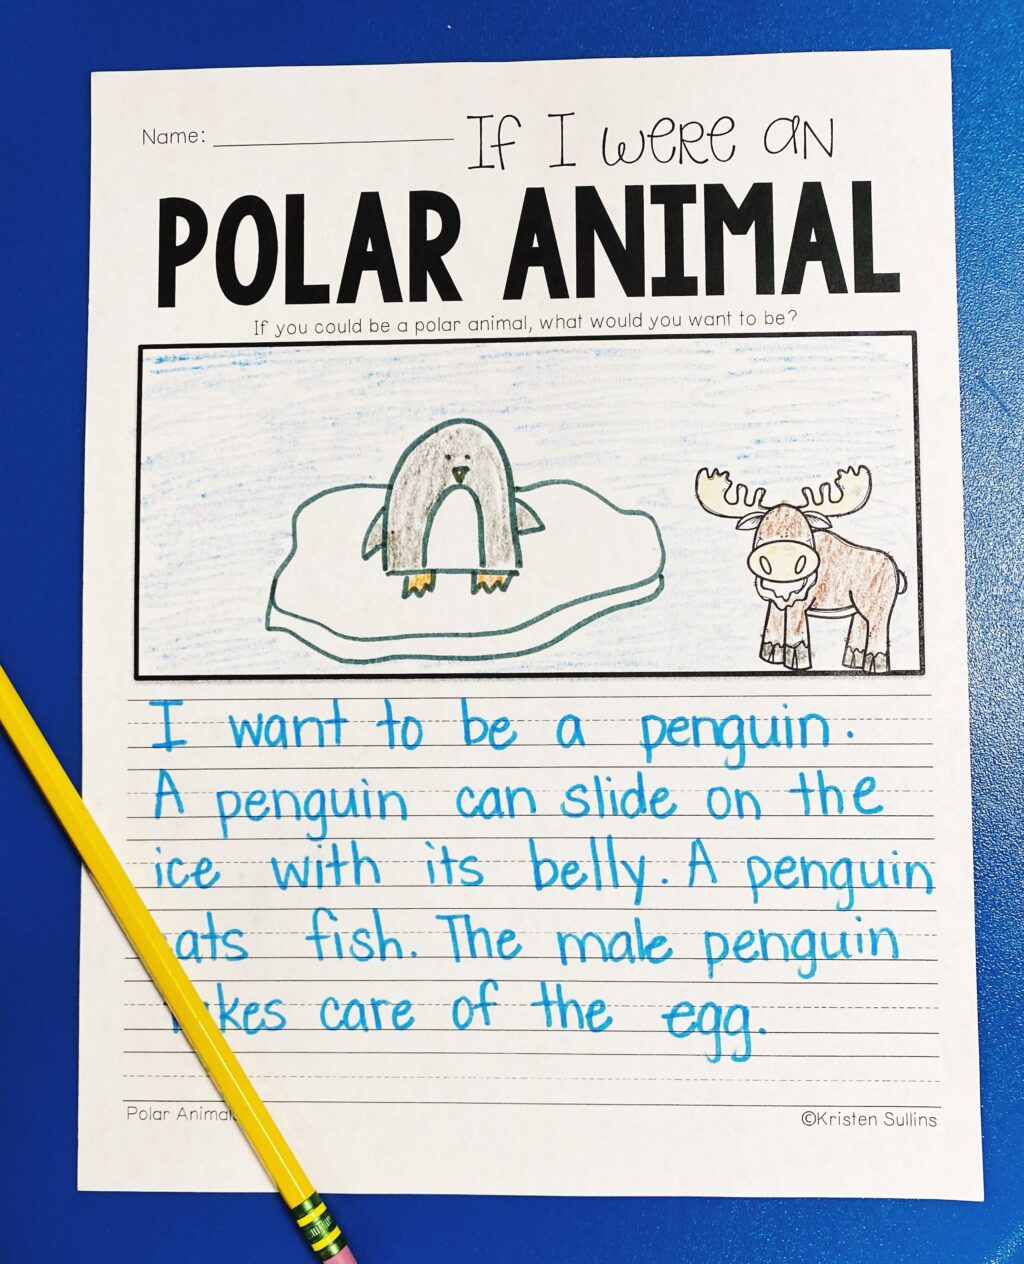 Polar Animals for First Grade - Kristen Sullins Teaching